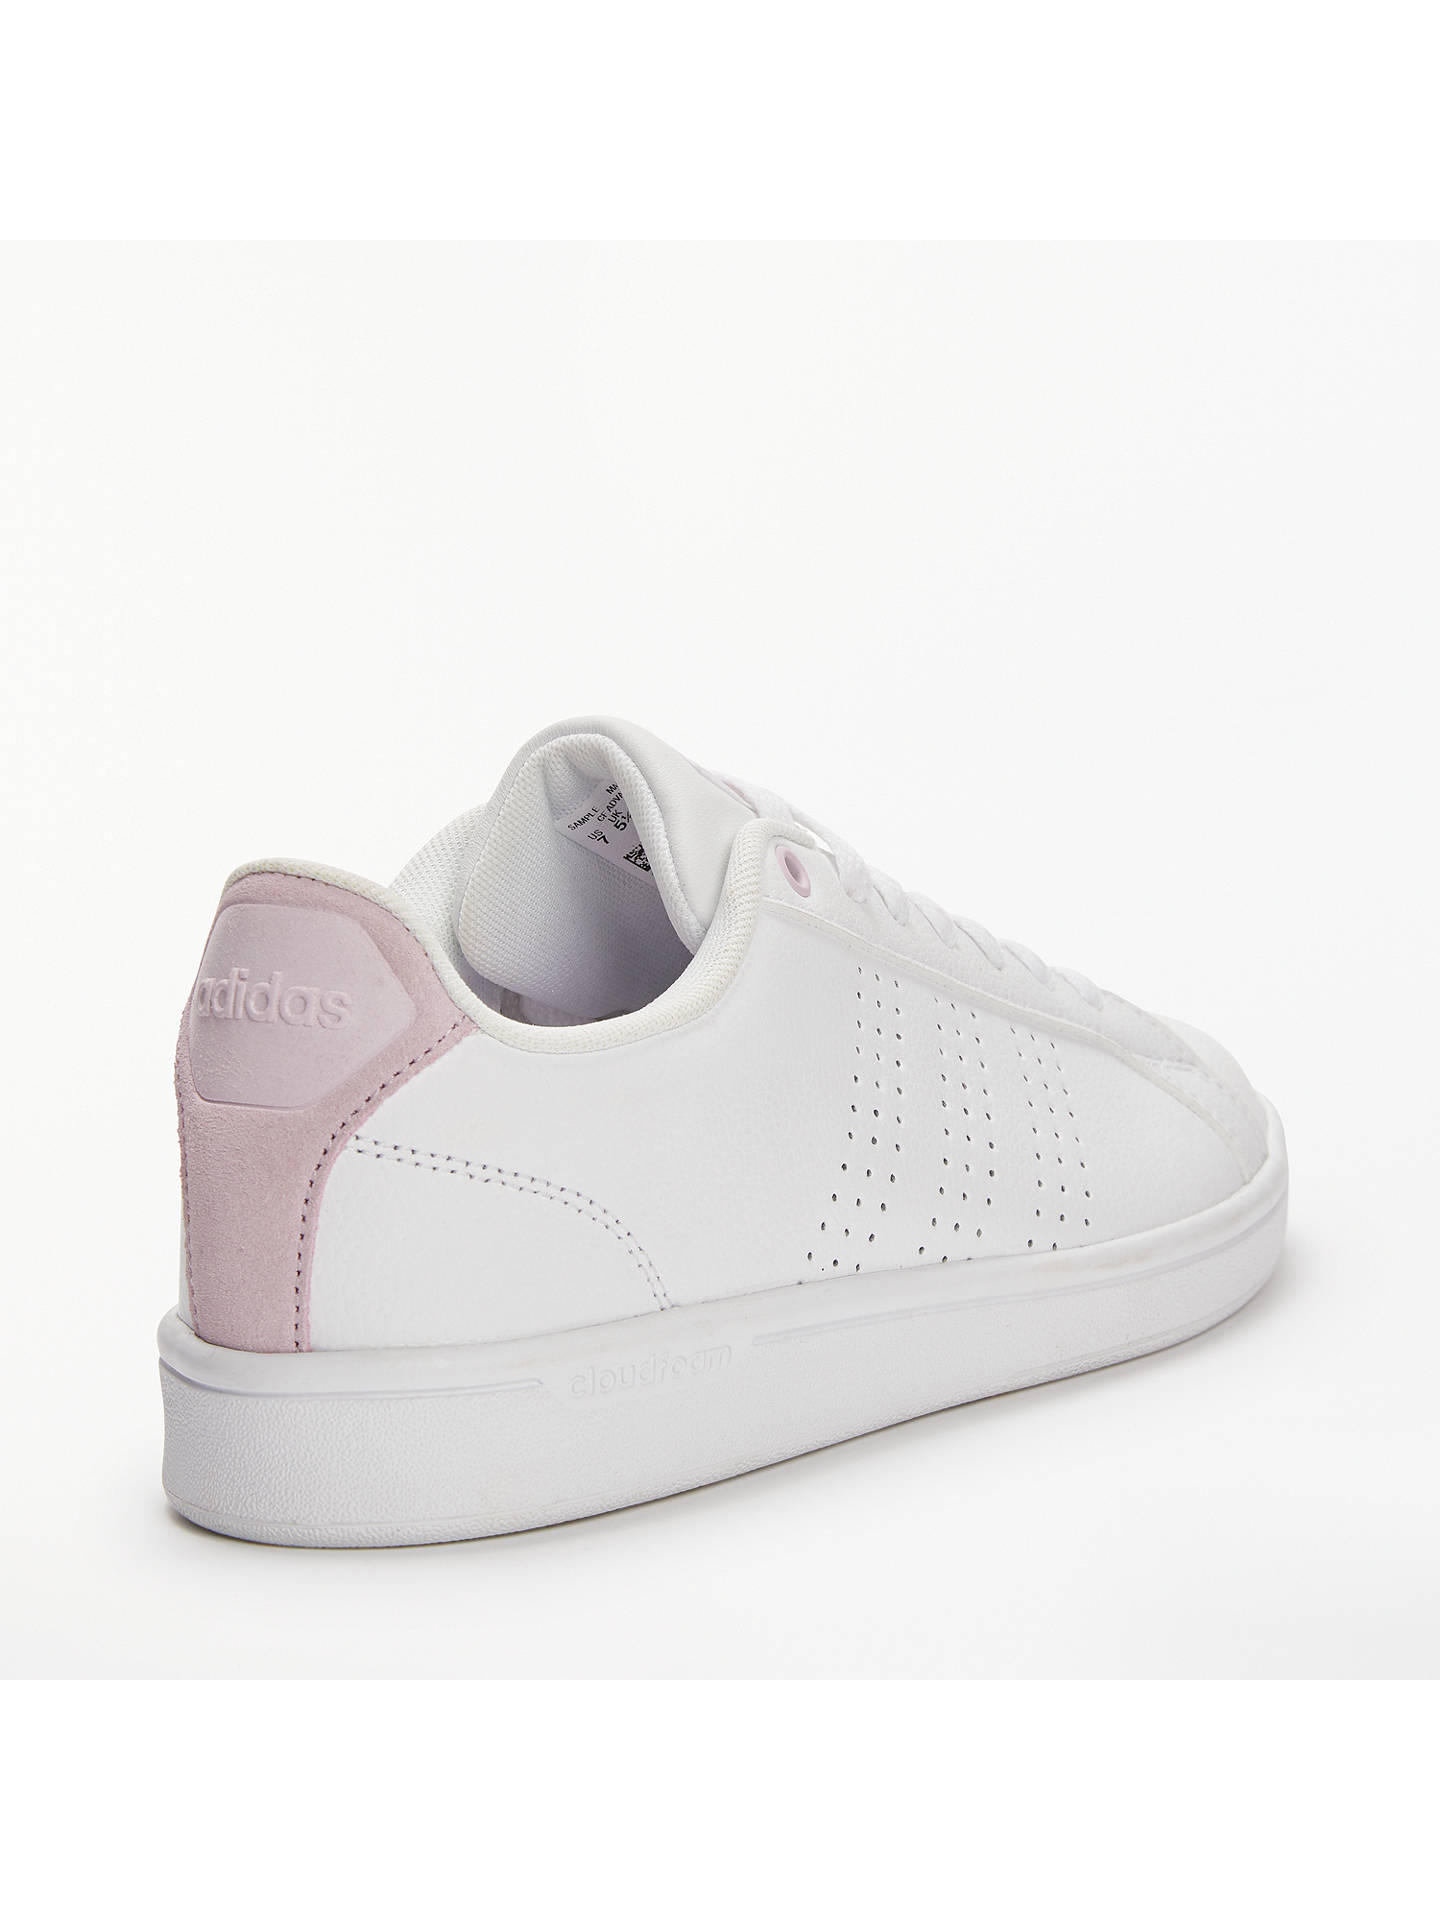 Adidas Neo Cloudfoam Advantage Women S Trainers White Pink At John Lewis Partners